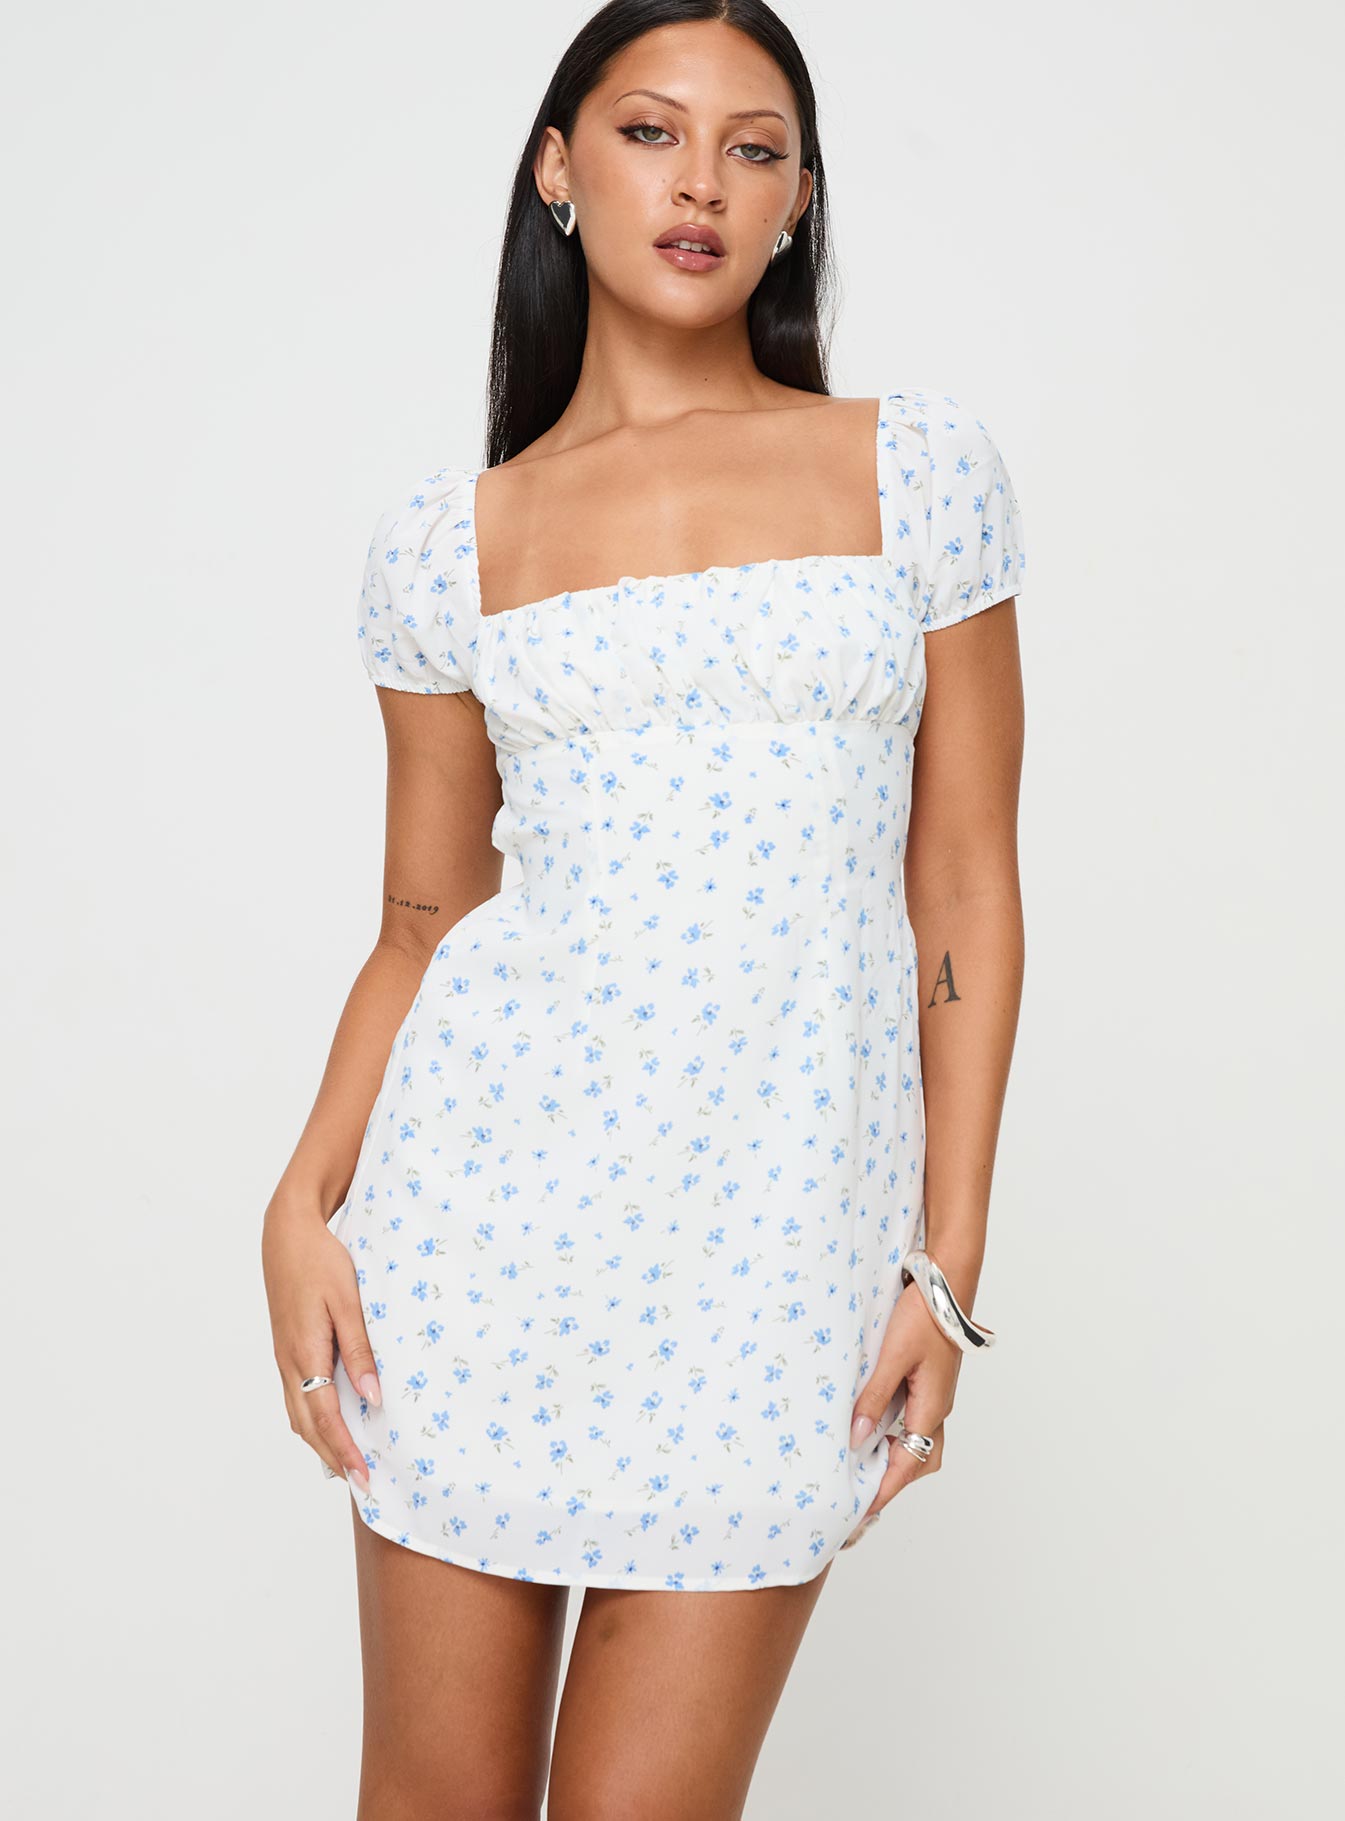 Powells Mini Dress White / Blue Floral